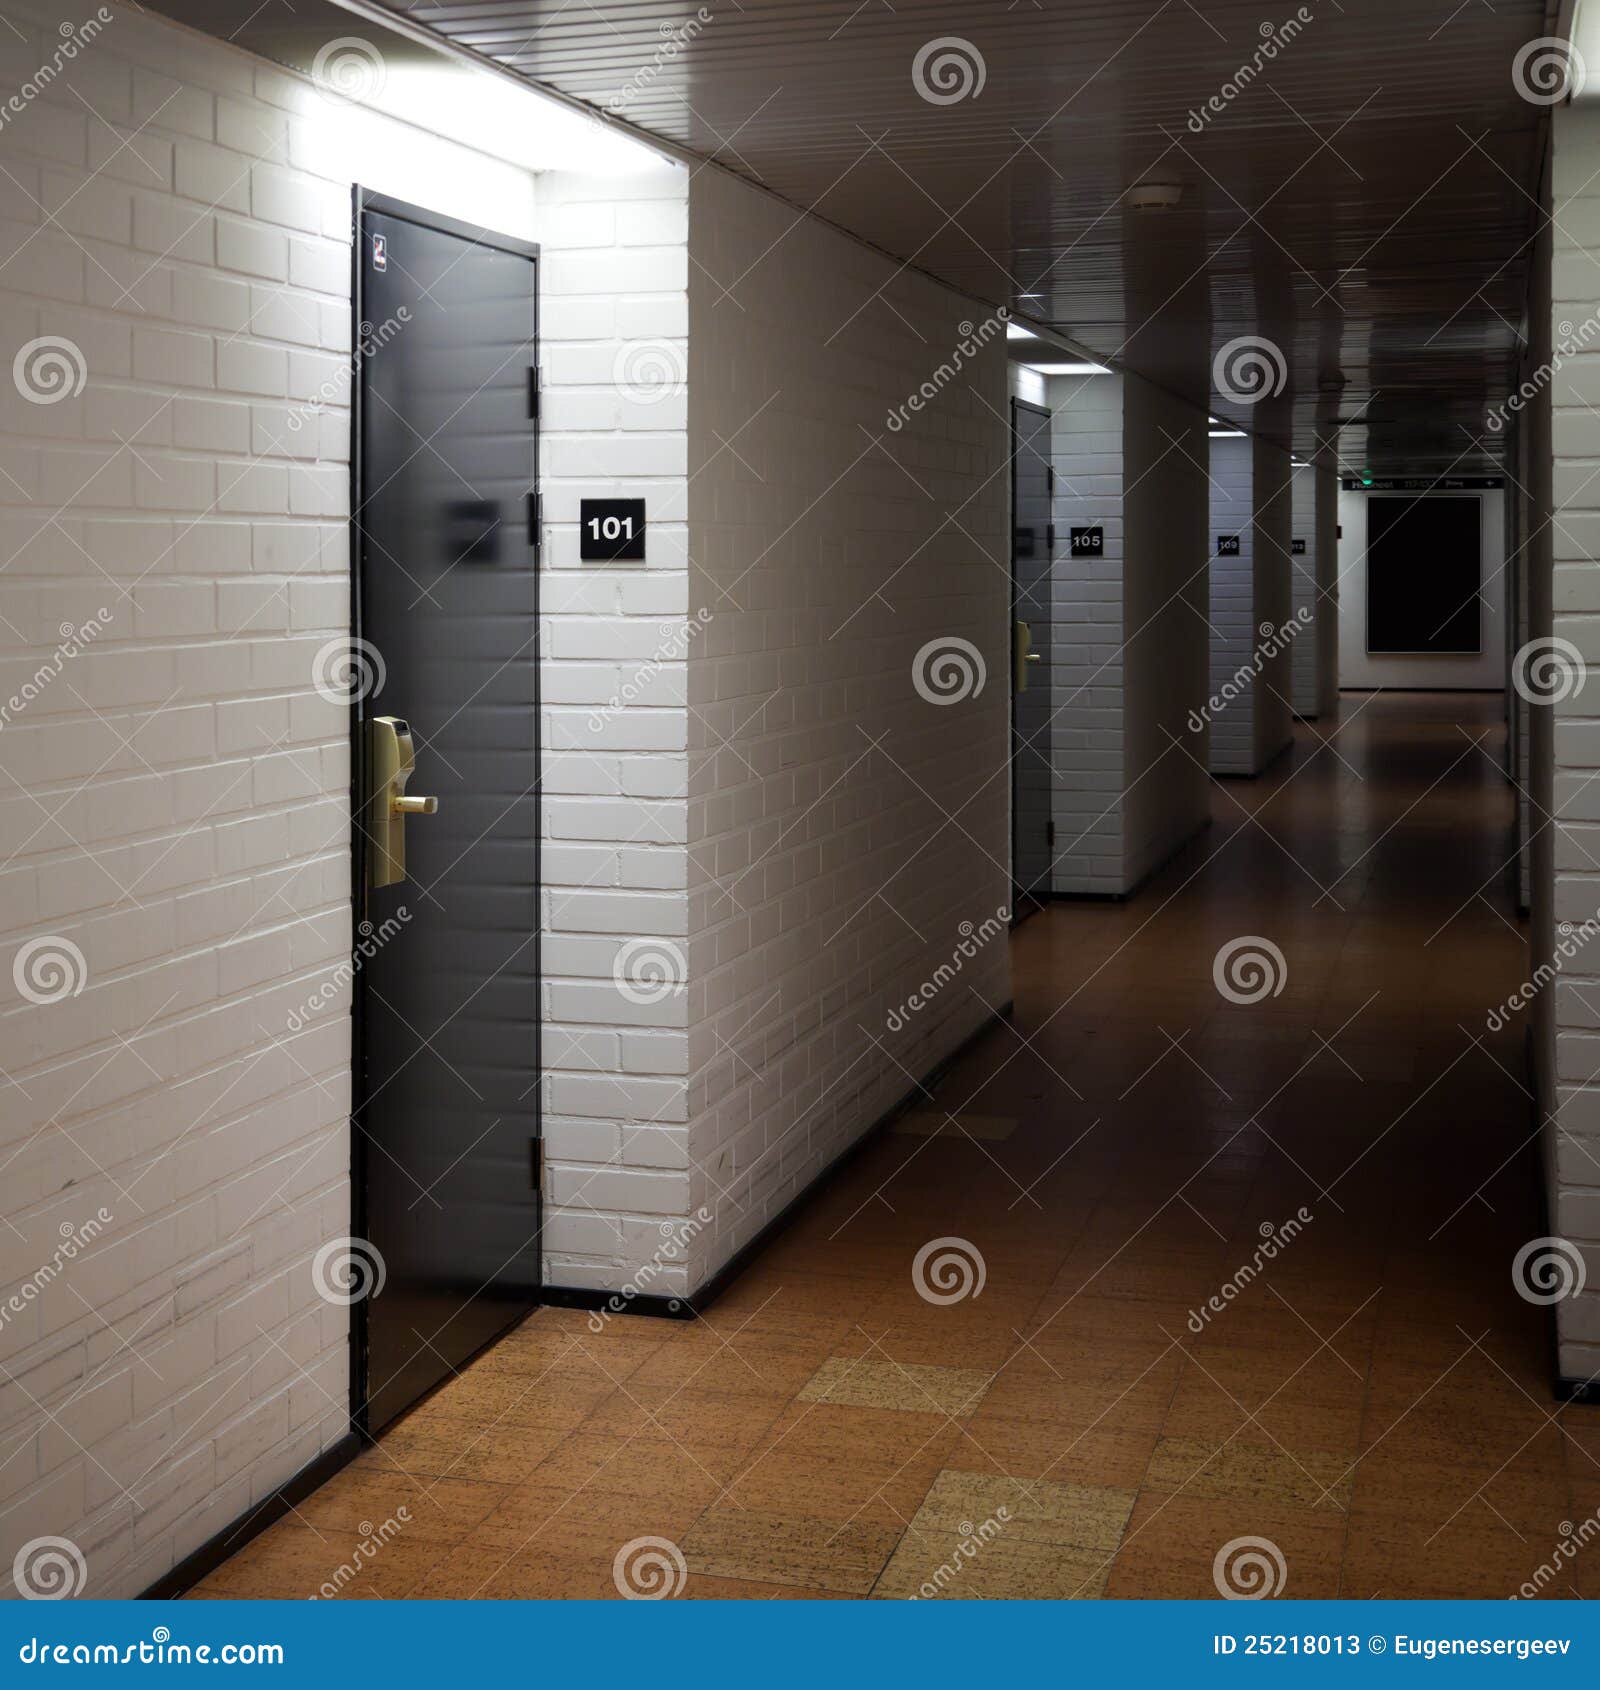 Hotel Corridor Interior Stock Image Image Of Design 25218013